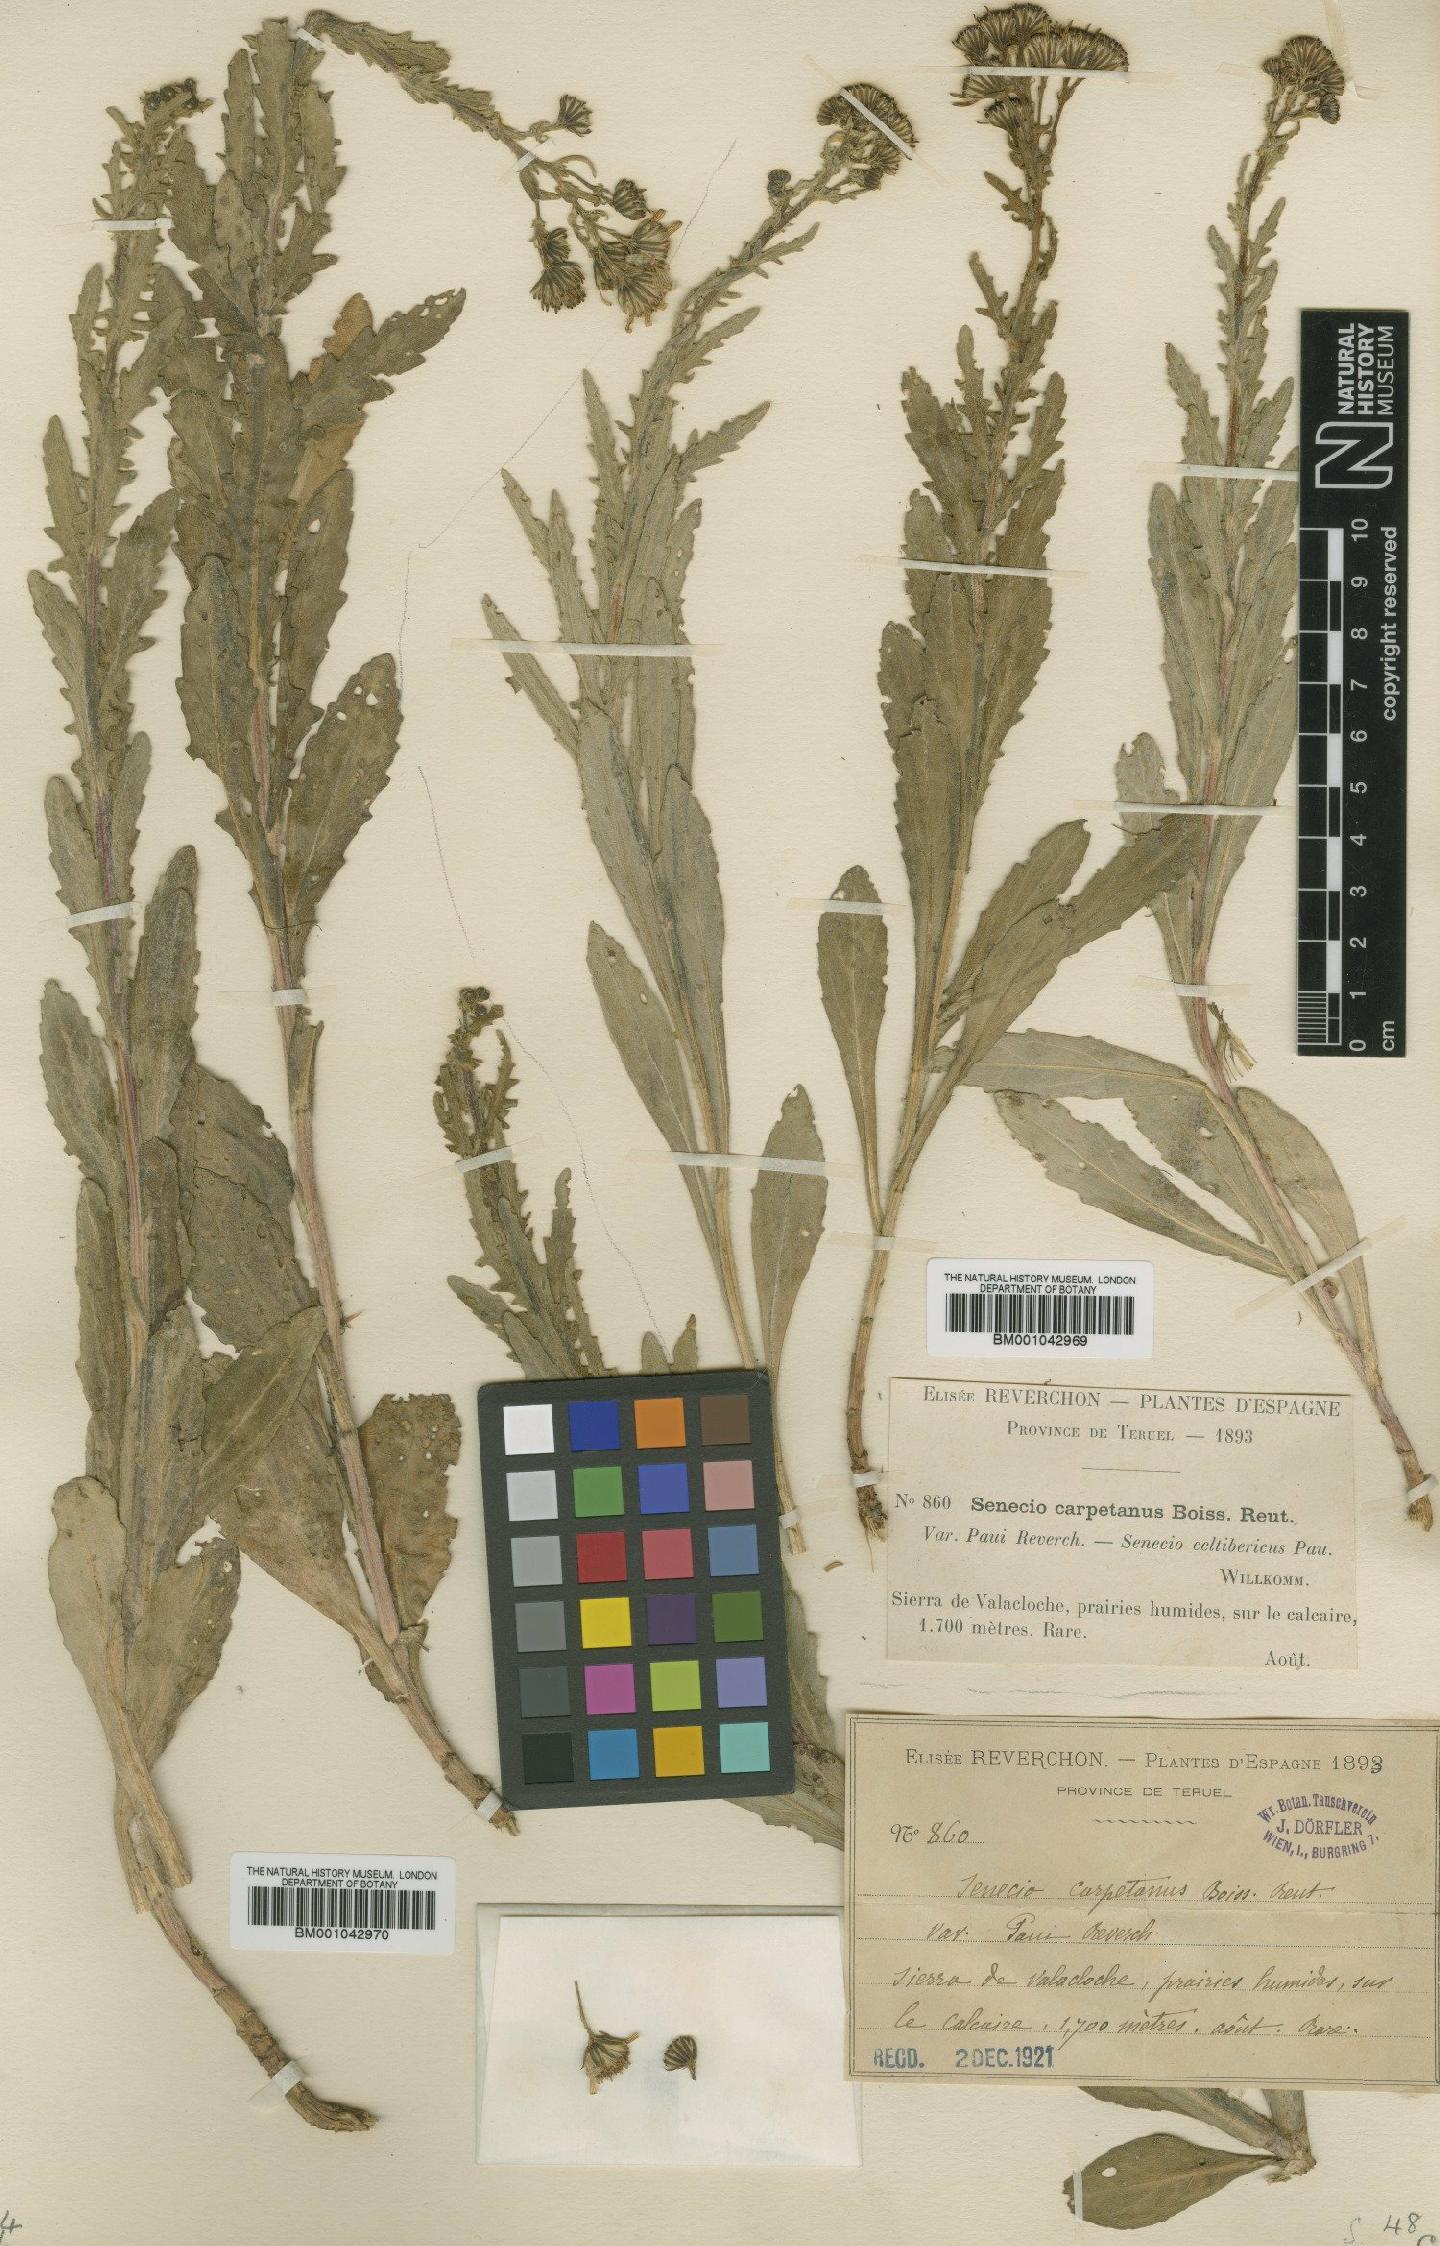 To NHMUK collection (Senecio carpetanus Boiss. & Reut.; Type; NHMUK:ecatalogue:1943637)